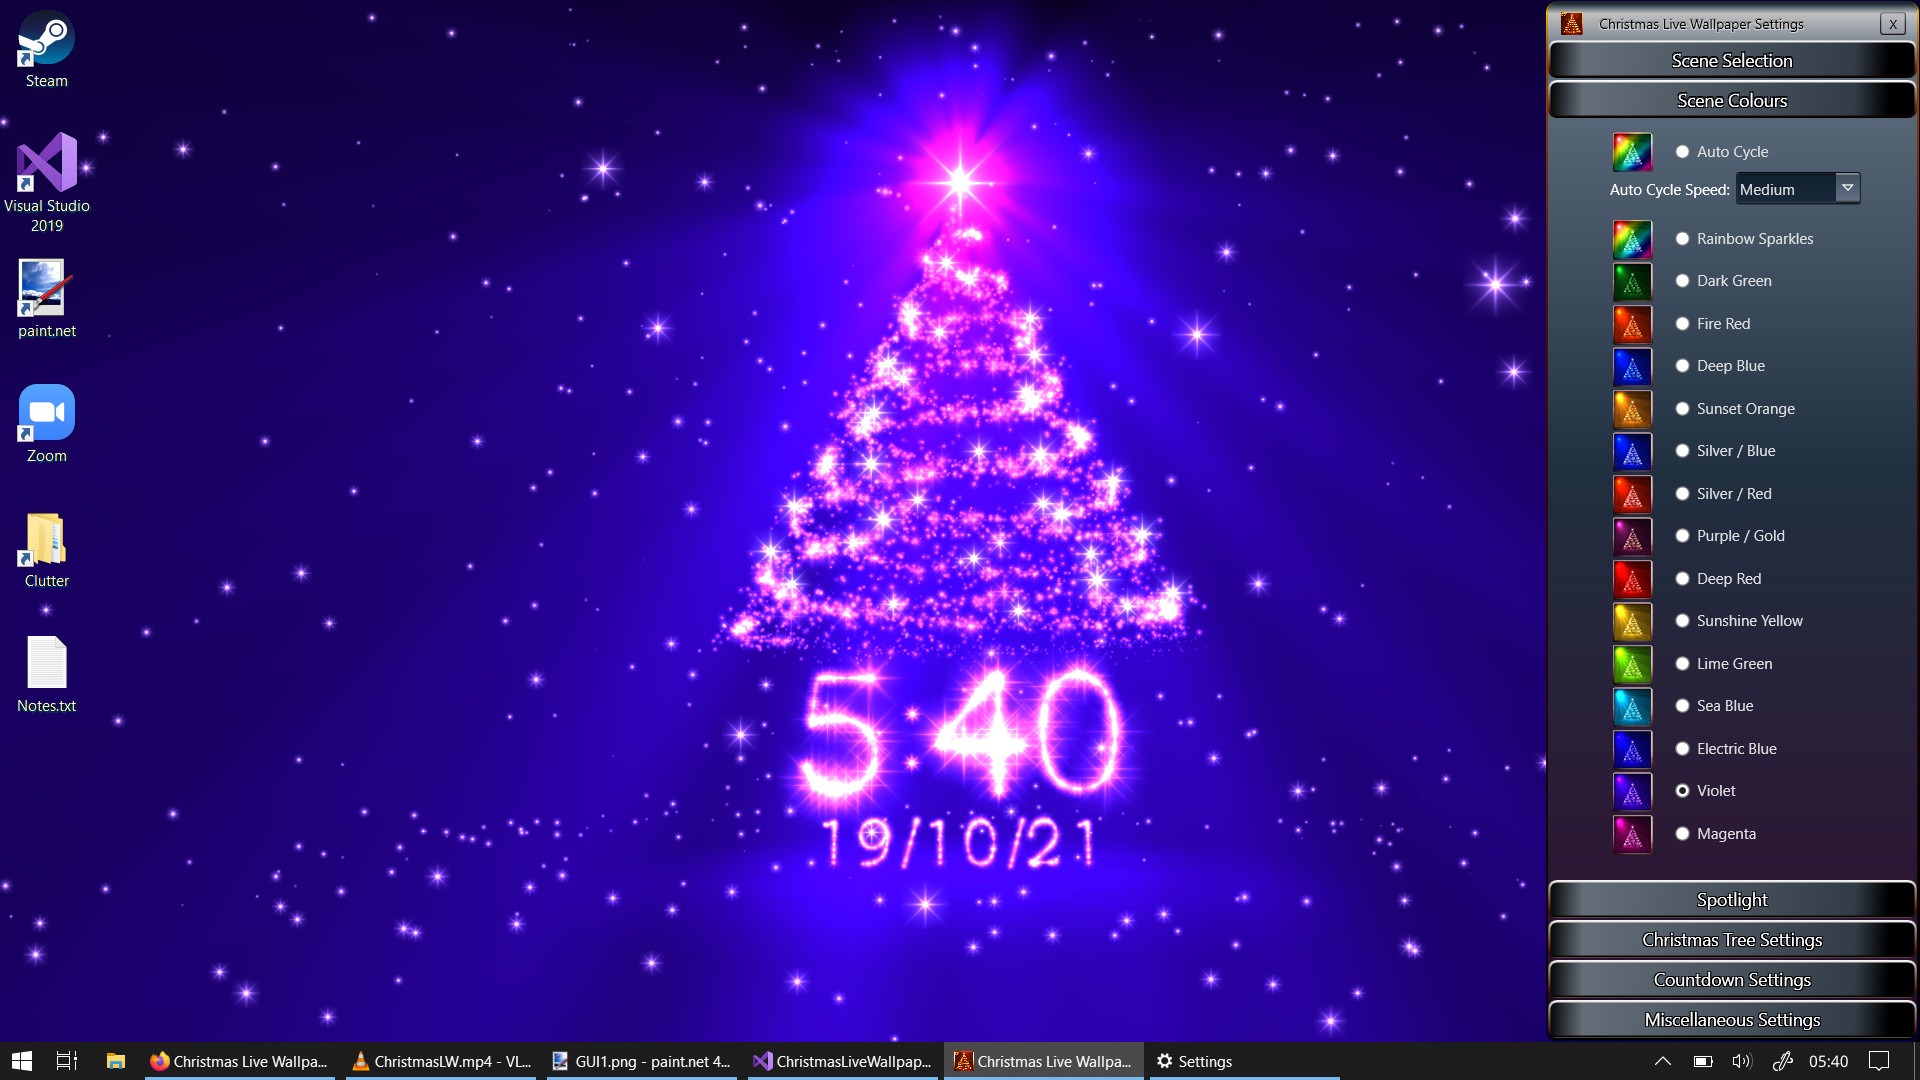 Christmas Live Wallpaper on Steam